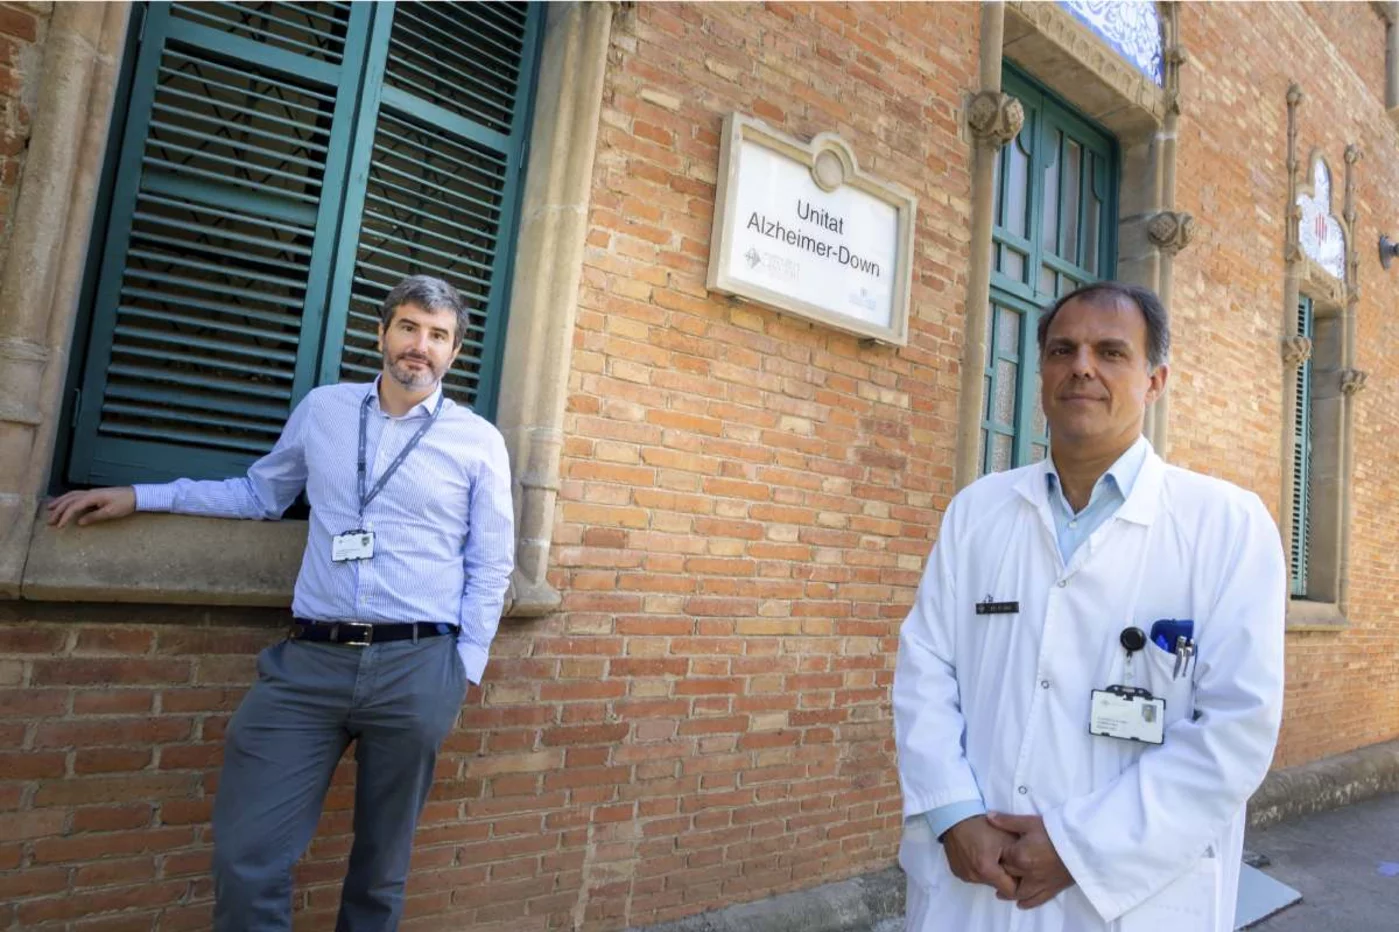 Juan Fortea, Jefe de la Unidad Alzheimer Down - Albert Lleo Bisa Director de la Unidad de Memoria. ambos del Servicio de Neurología Hospital Sant Pau. (Foto: Jaume Cosialls)